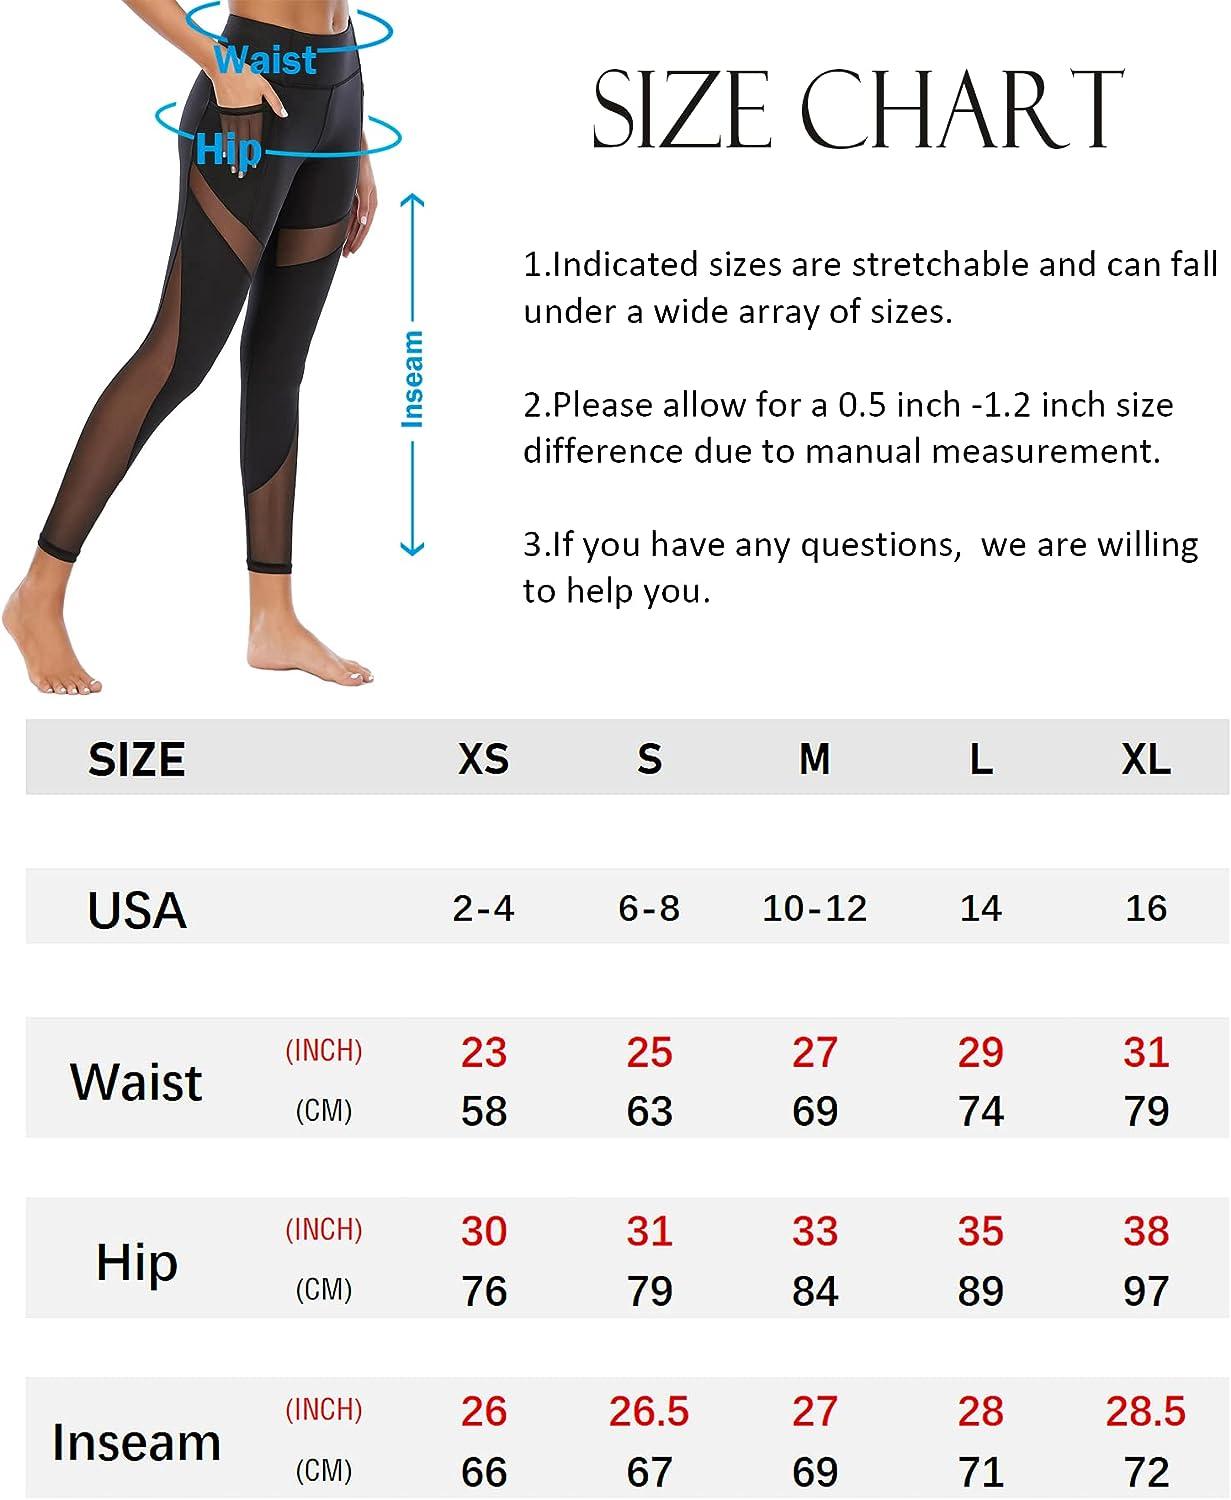 Women's High Waist Mesh Yoga Pants Stretch Running Tight Fitness Stretch  Tummy Control Workout Squat-Proof Pants (Black, XL)